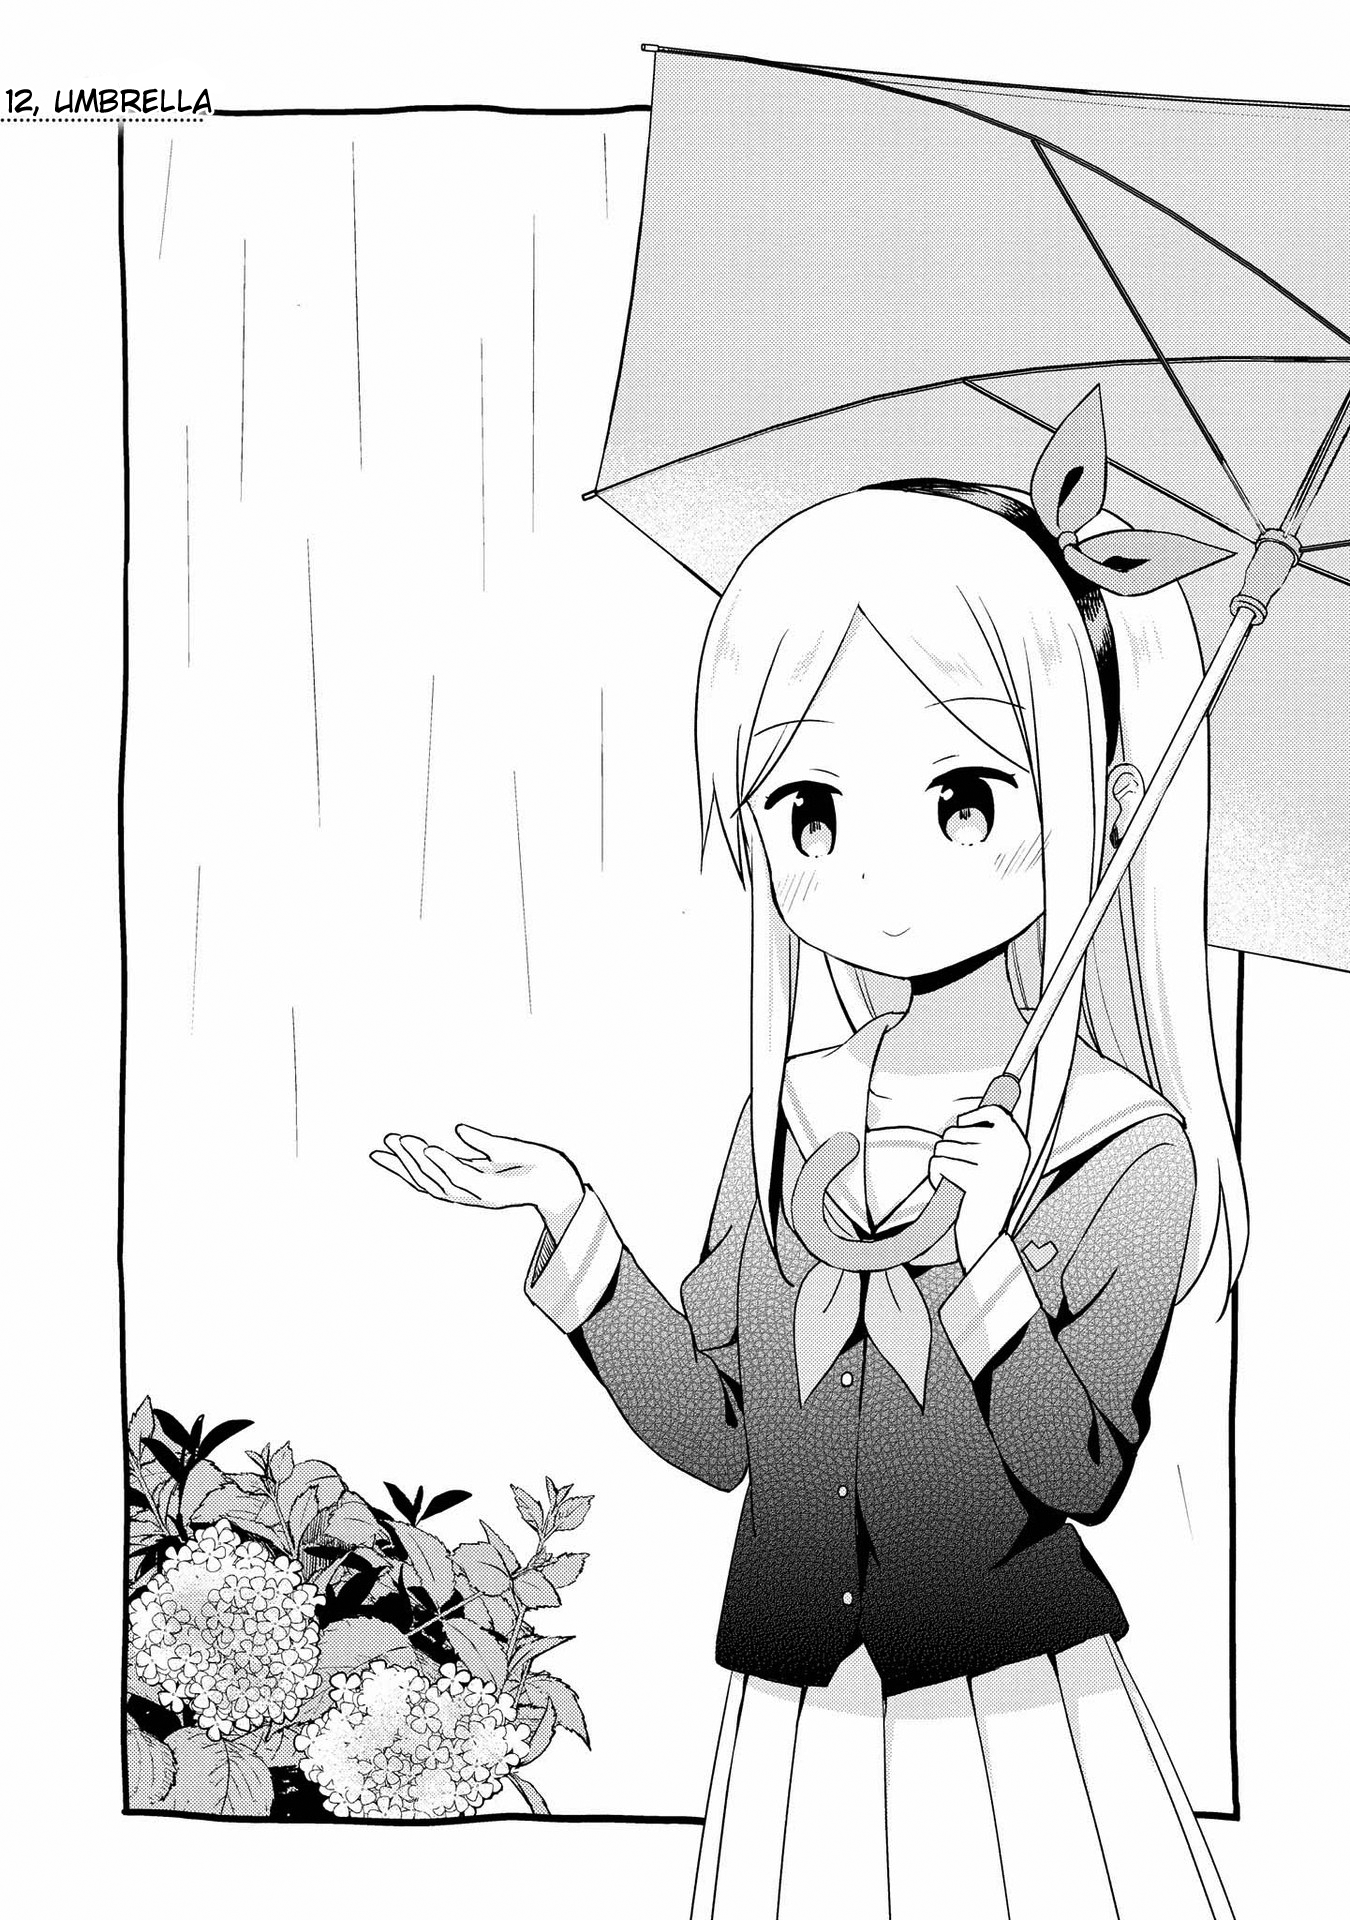 Mirai No Fu Fu Desu Kedo? Vol.2 Chapter 12: Umbrella - Picture 1